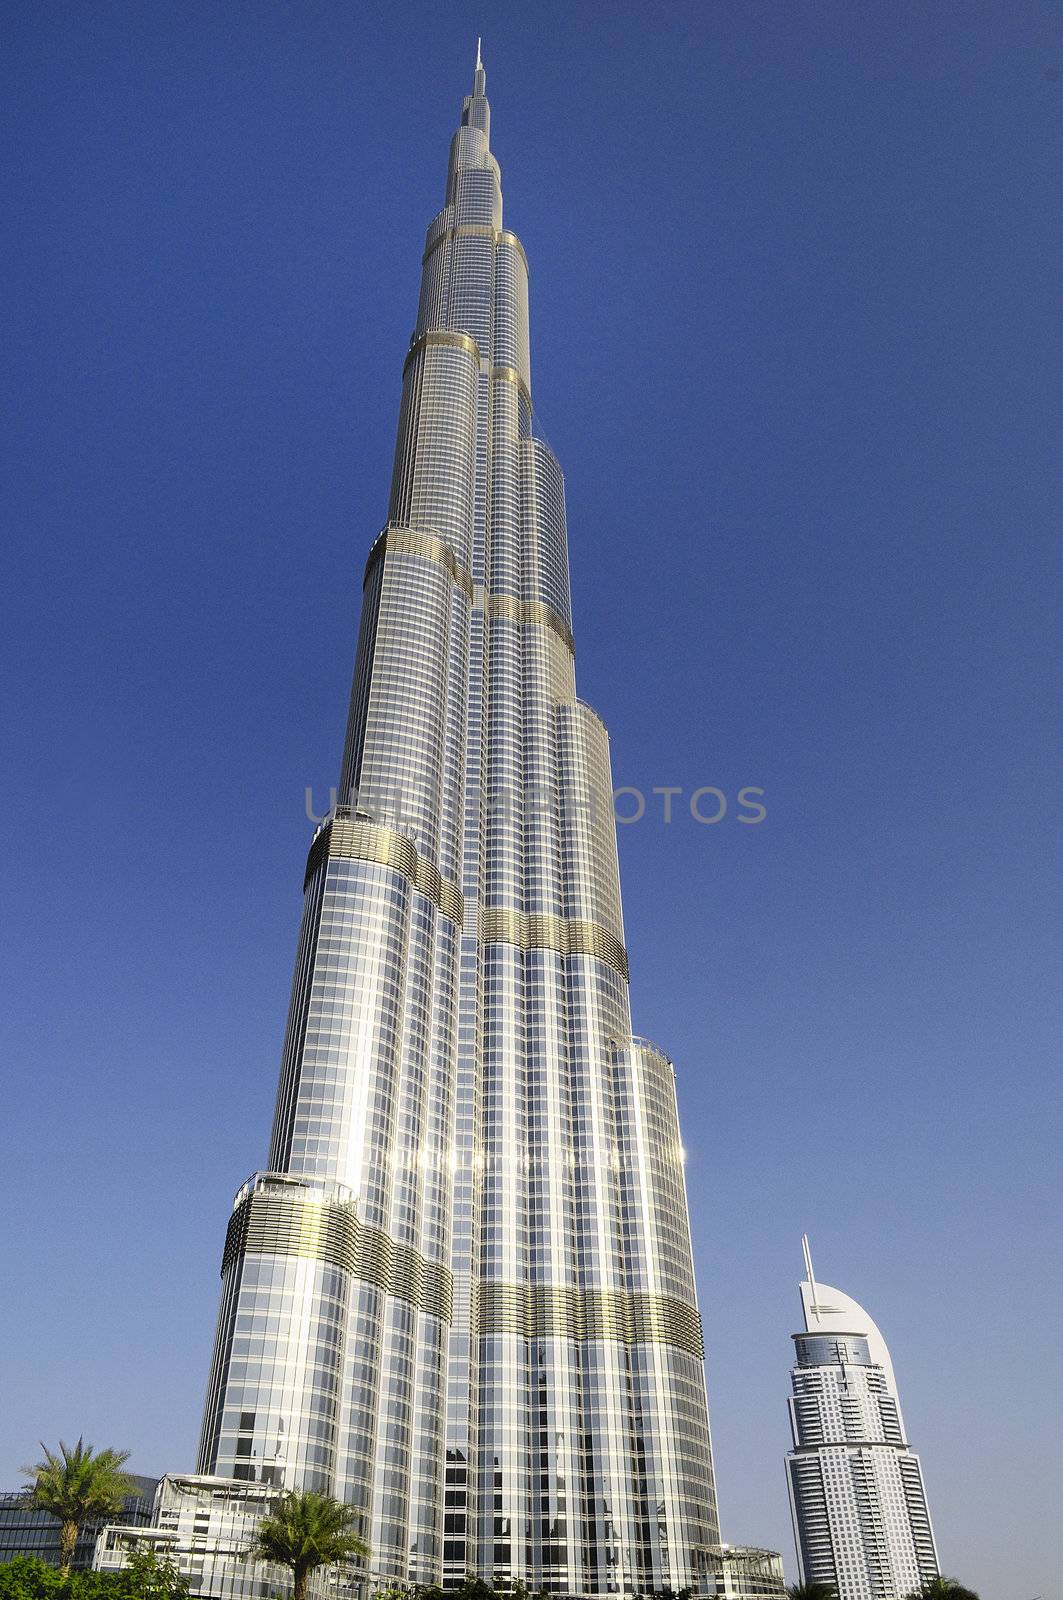 DUBAI, UAE - FEBRUARY 22: DUBAI, UAE - FEB 22: The Address Hotel in the downtown Dubai area overlooks the dancing fountains, and Burj Khalifa facade on February 22, 2012 in Dubai, UAE. Burj Khalifa is a tallest building in the world, at 828m. Located on Downtown Dubai, 